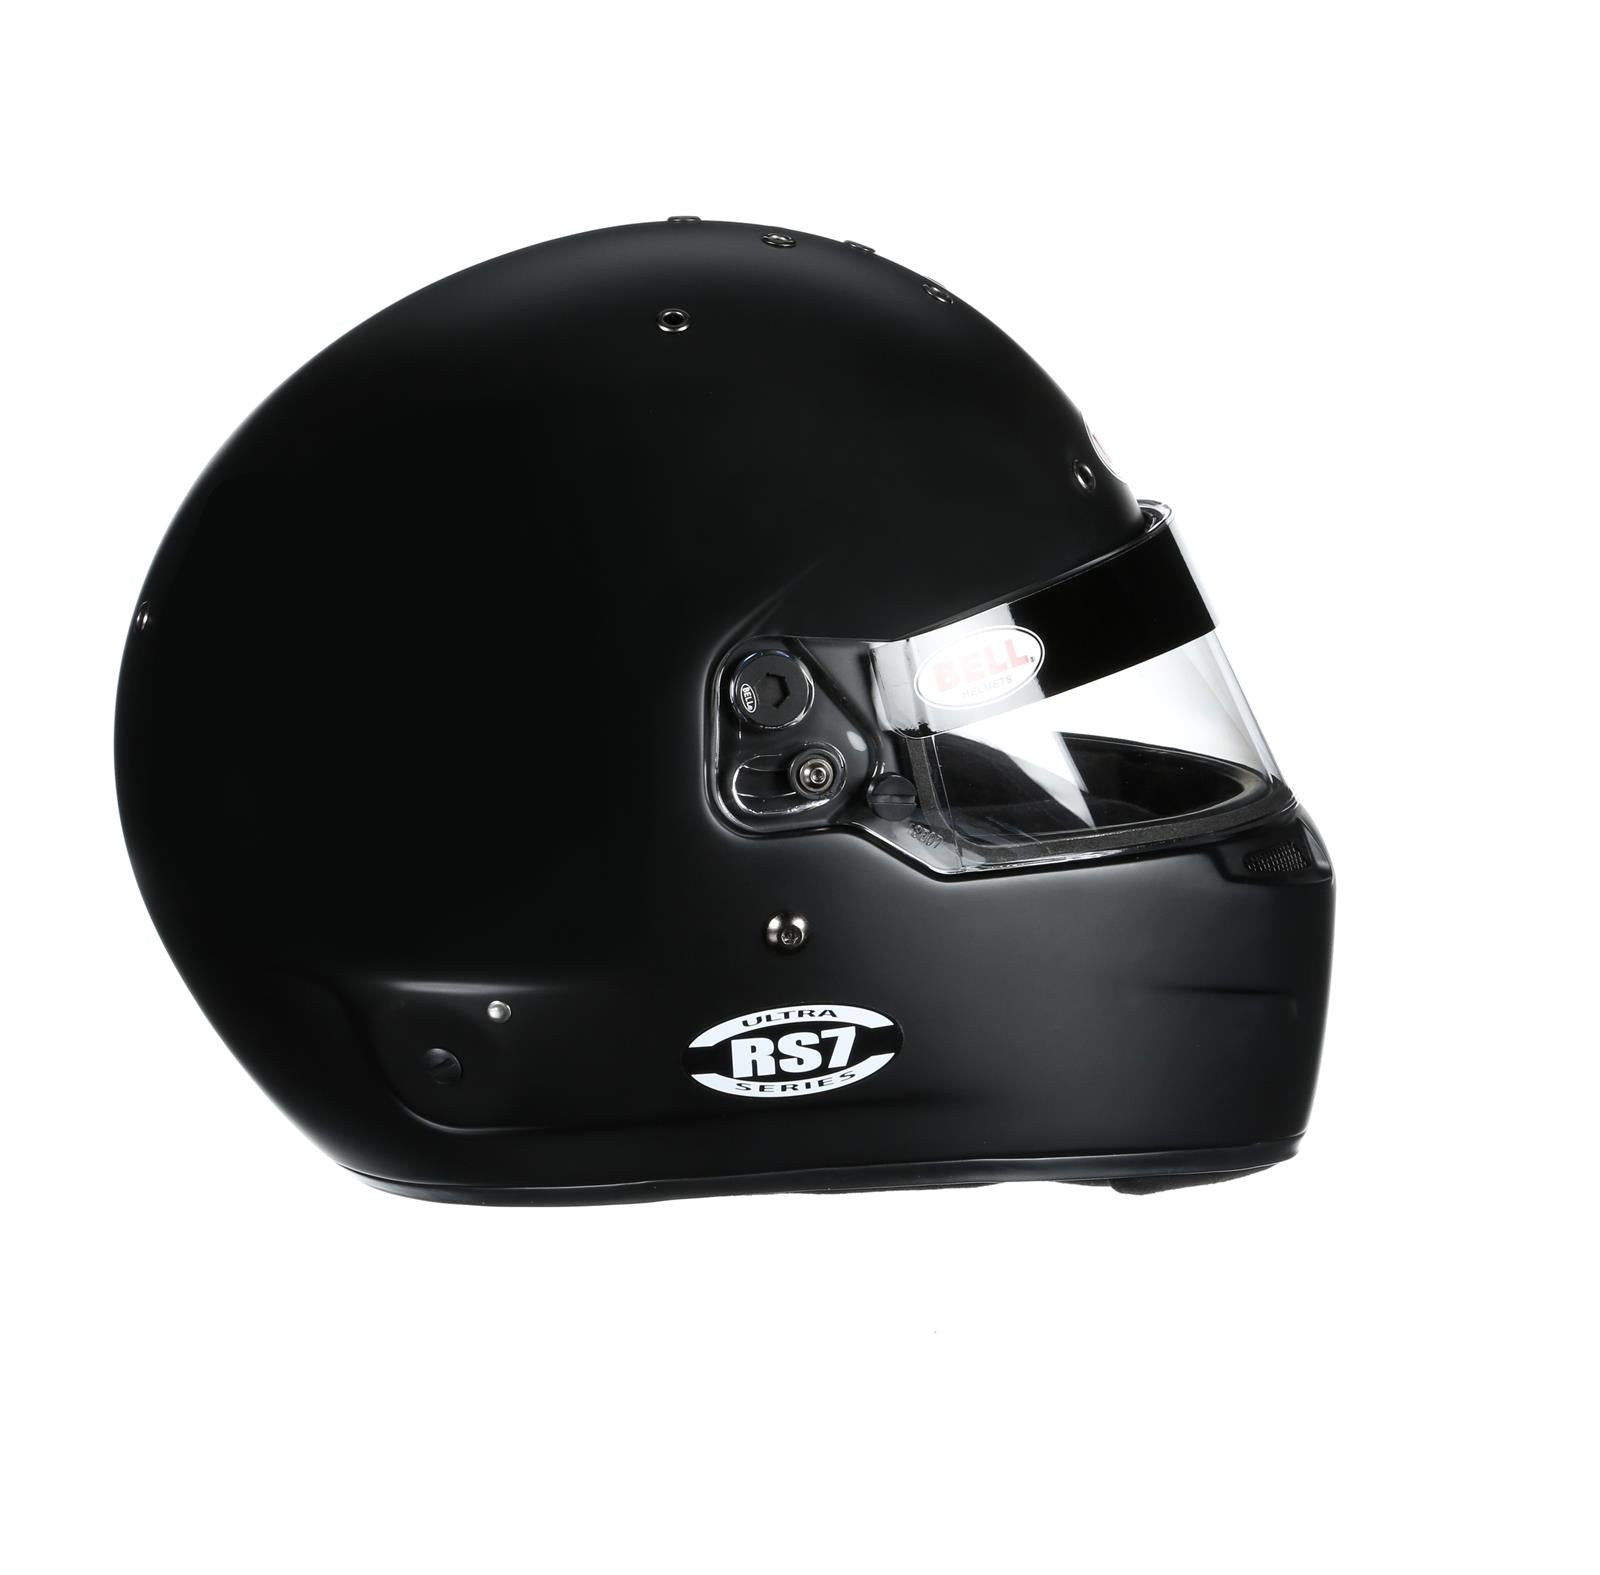 BELL 1310019 Racing helmet RS7 MATTE BLACK, SA2015/FIA8859, HANS, size 61+ (7 5/8+) Photo-3 